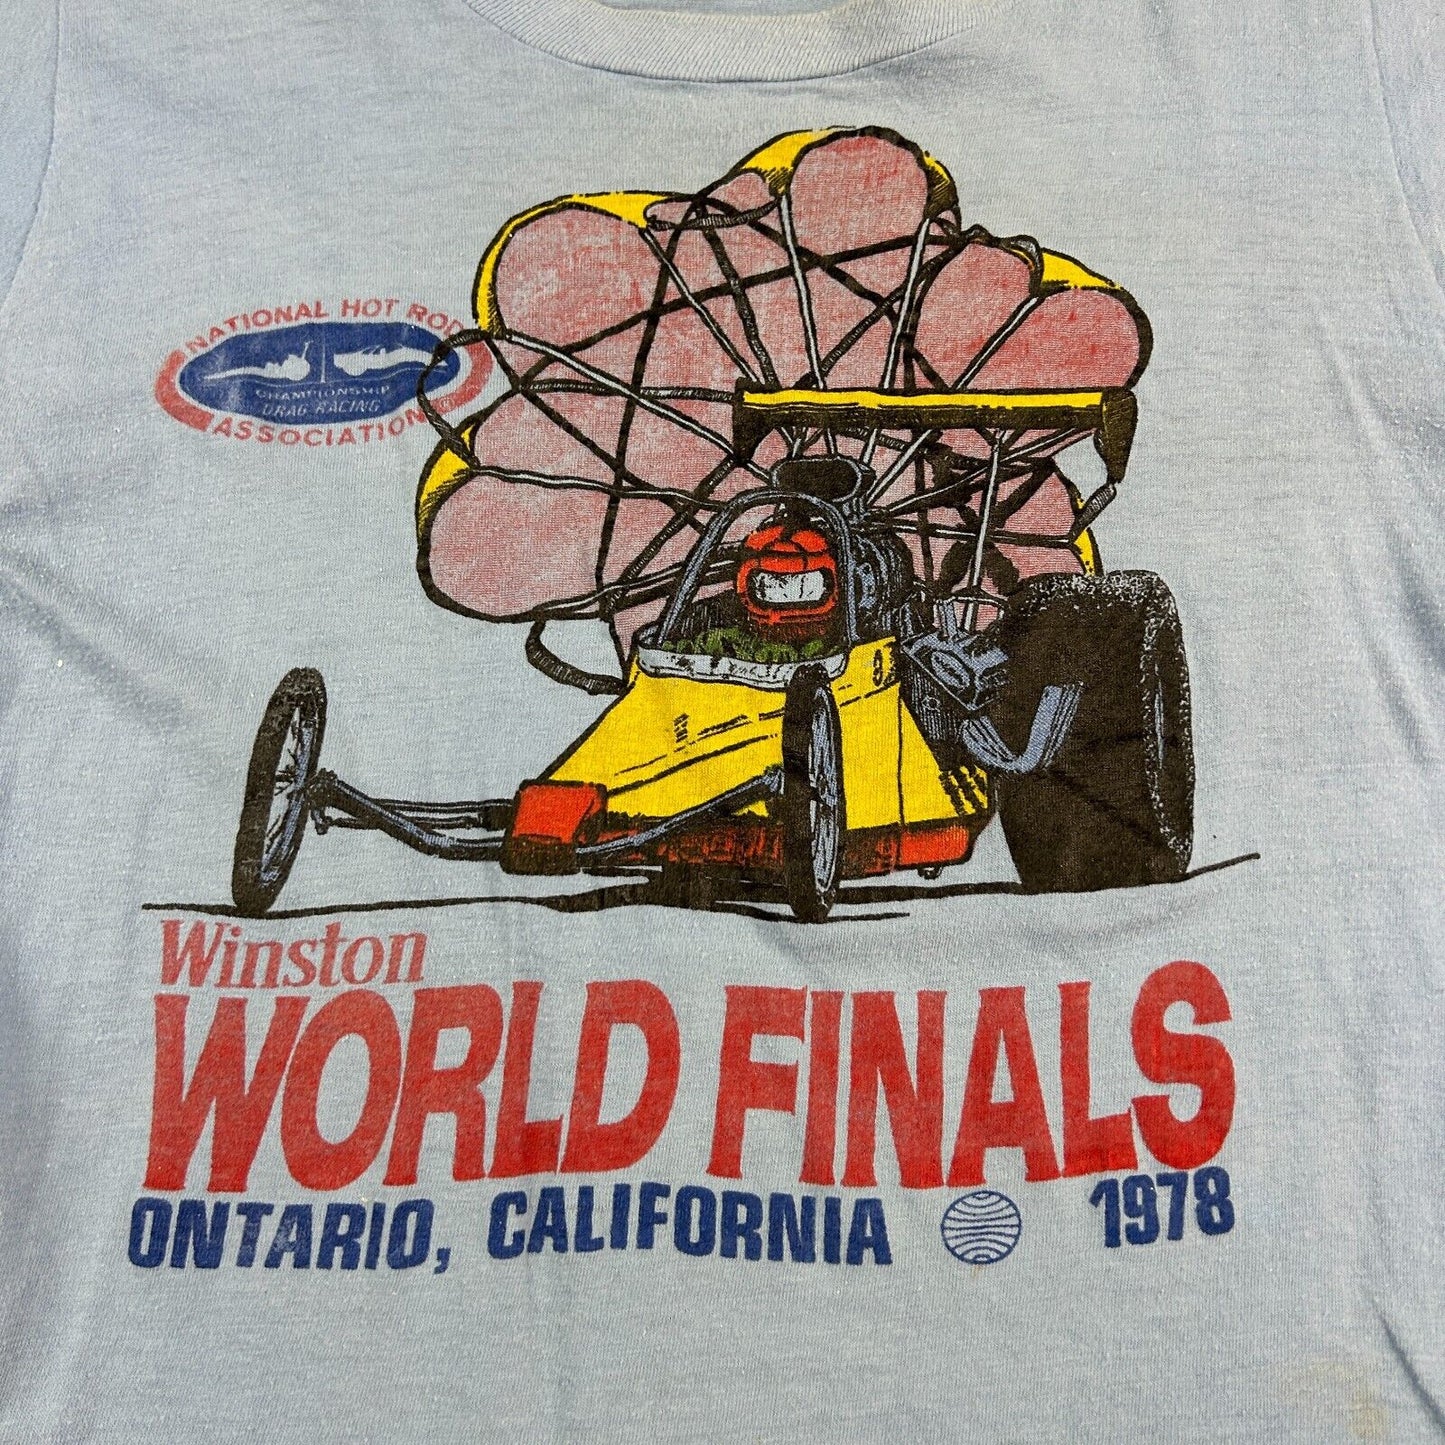 VINTAGE 1978 | WINSTON World Finals Hot Rod Racing T-Shirt sz Small Adult